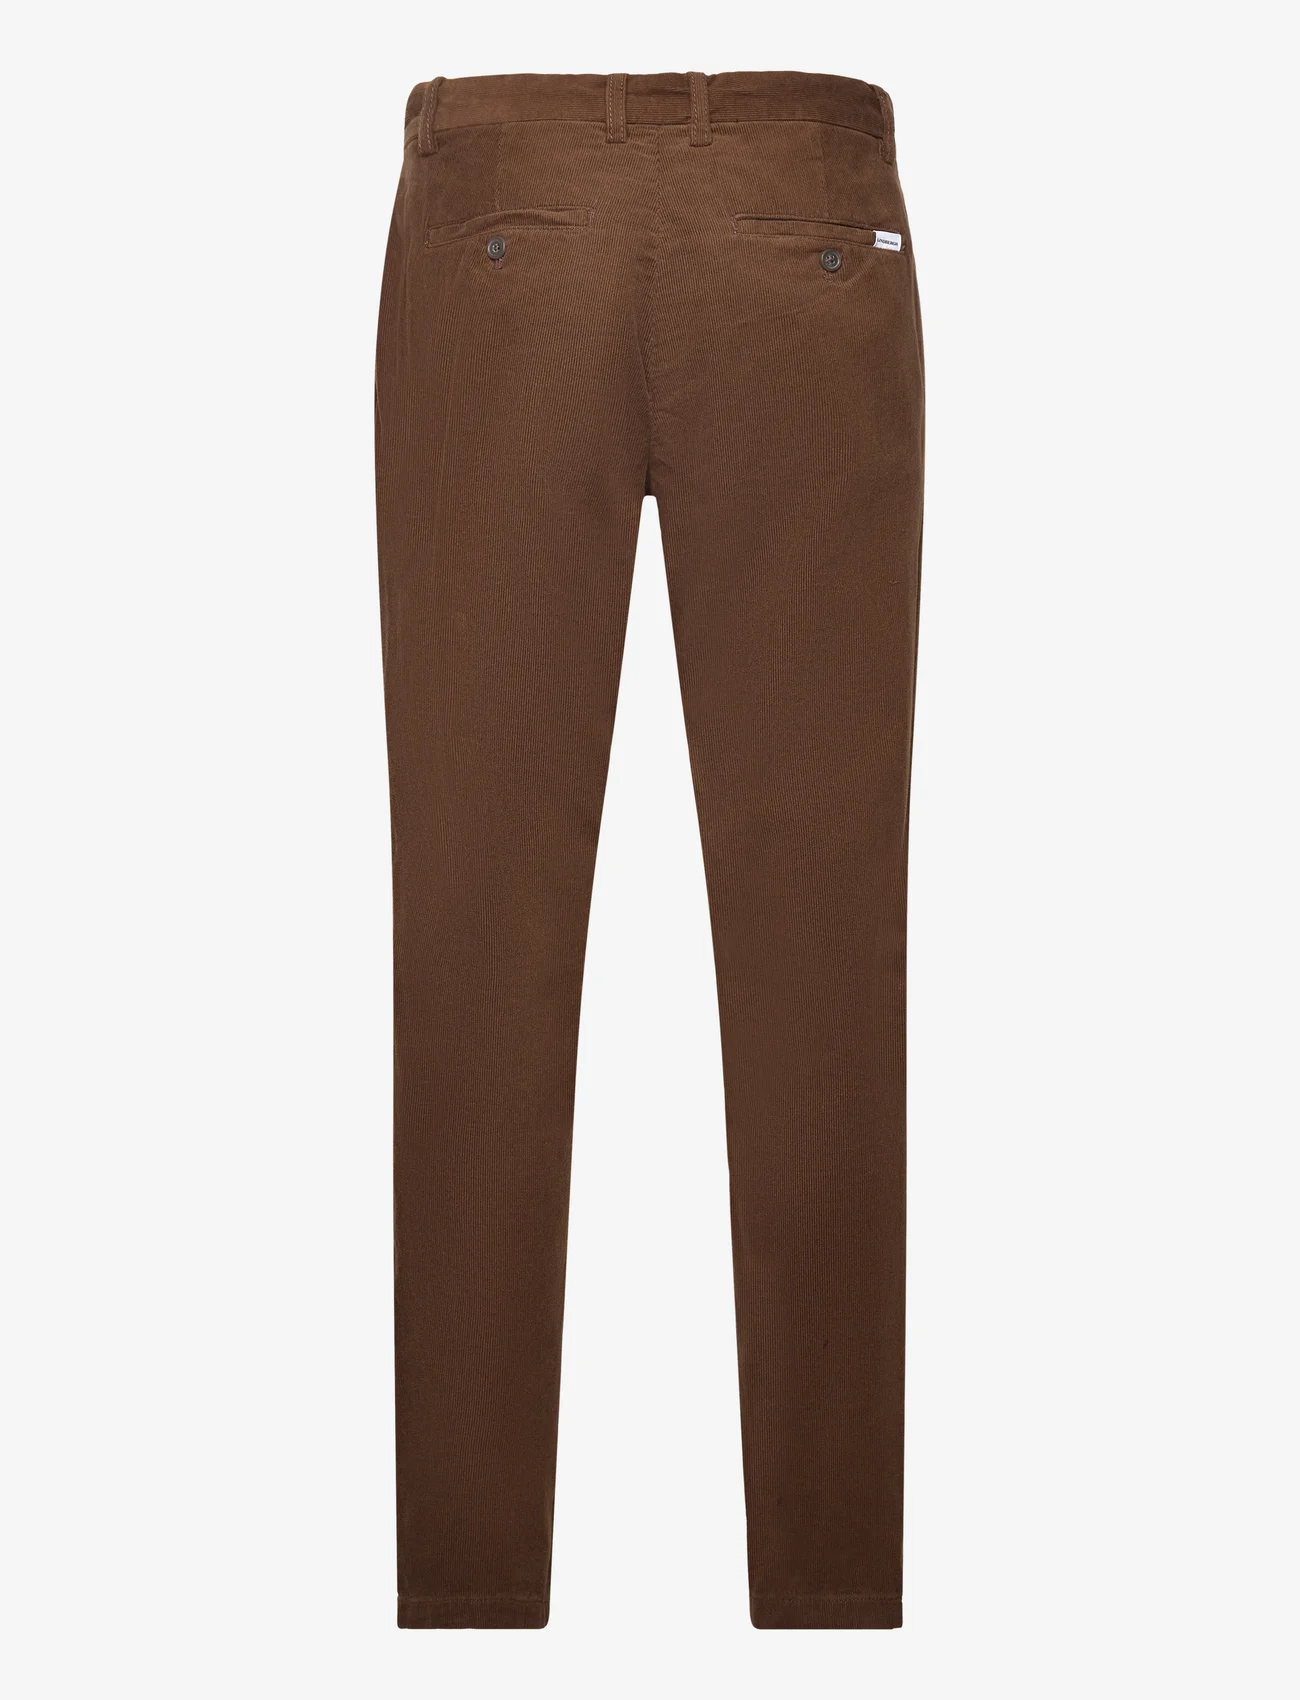 Lindbergh - Corduroy club pants - chinos - brown - 1